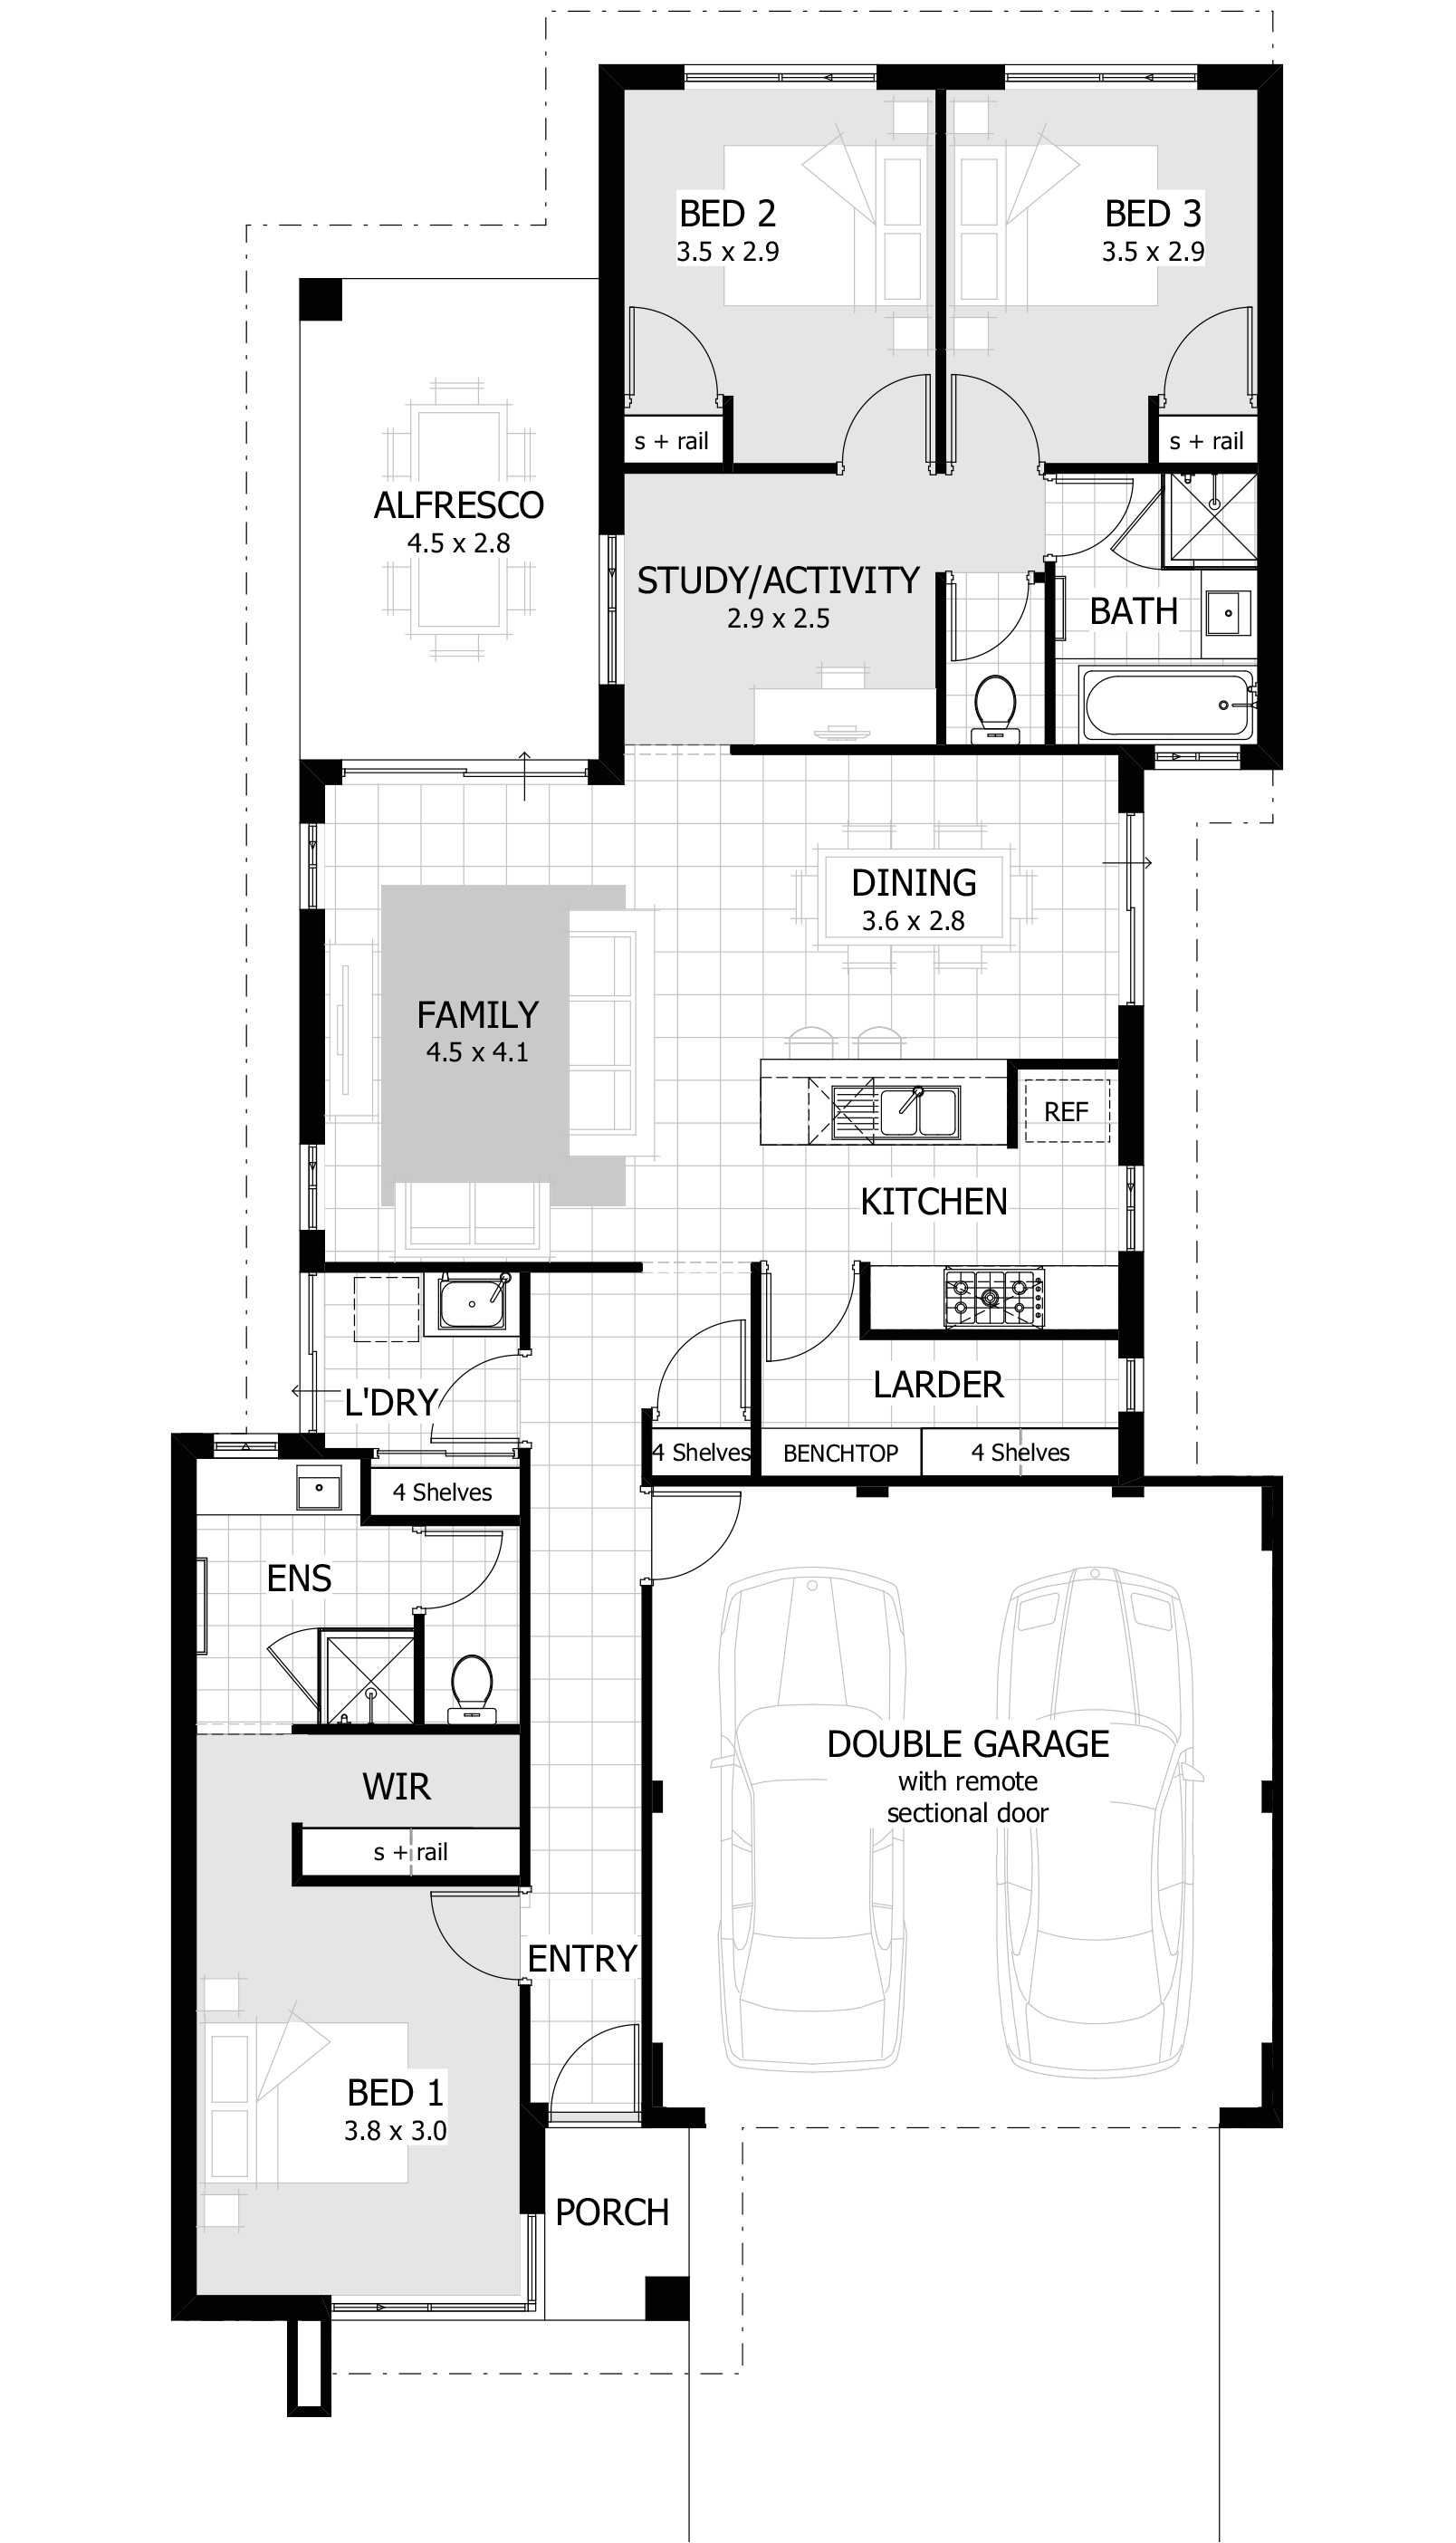 3 bedroom home designs plans